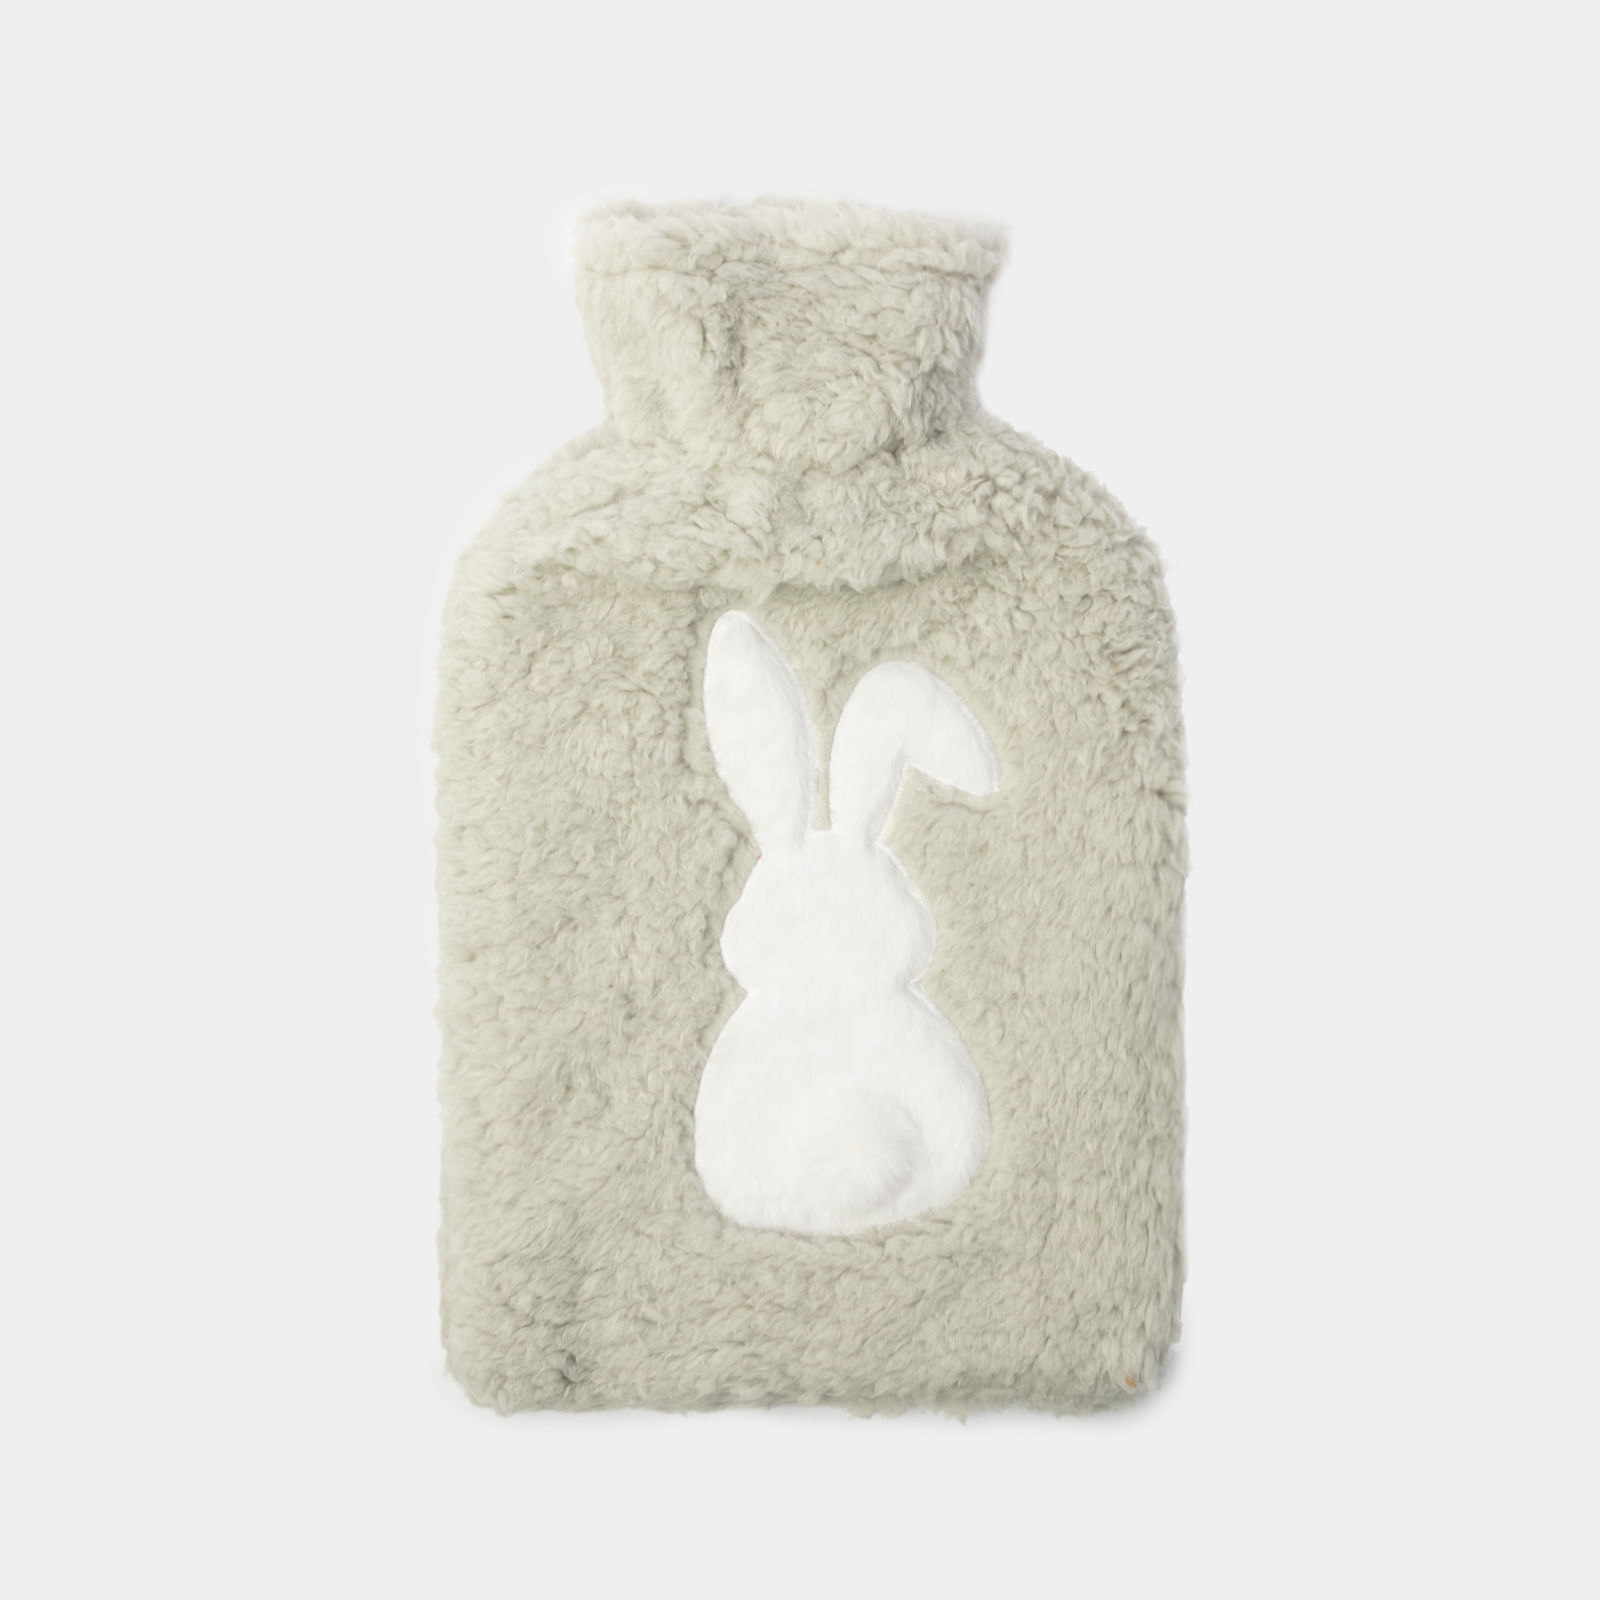 Compresas o bolsas eléctricas de agua caliente diseño conejo